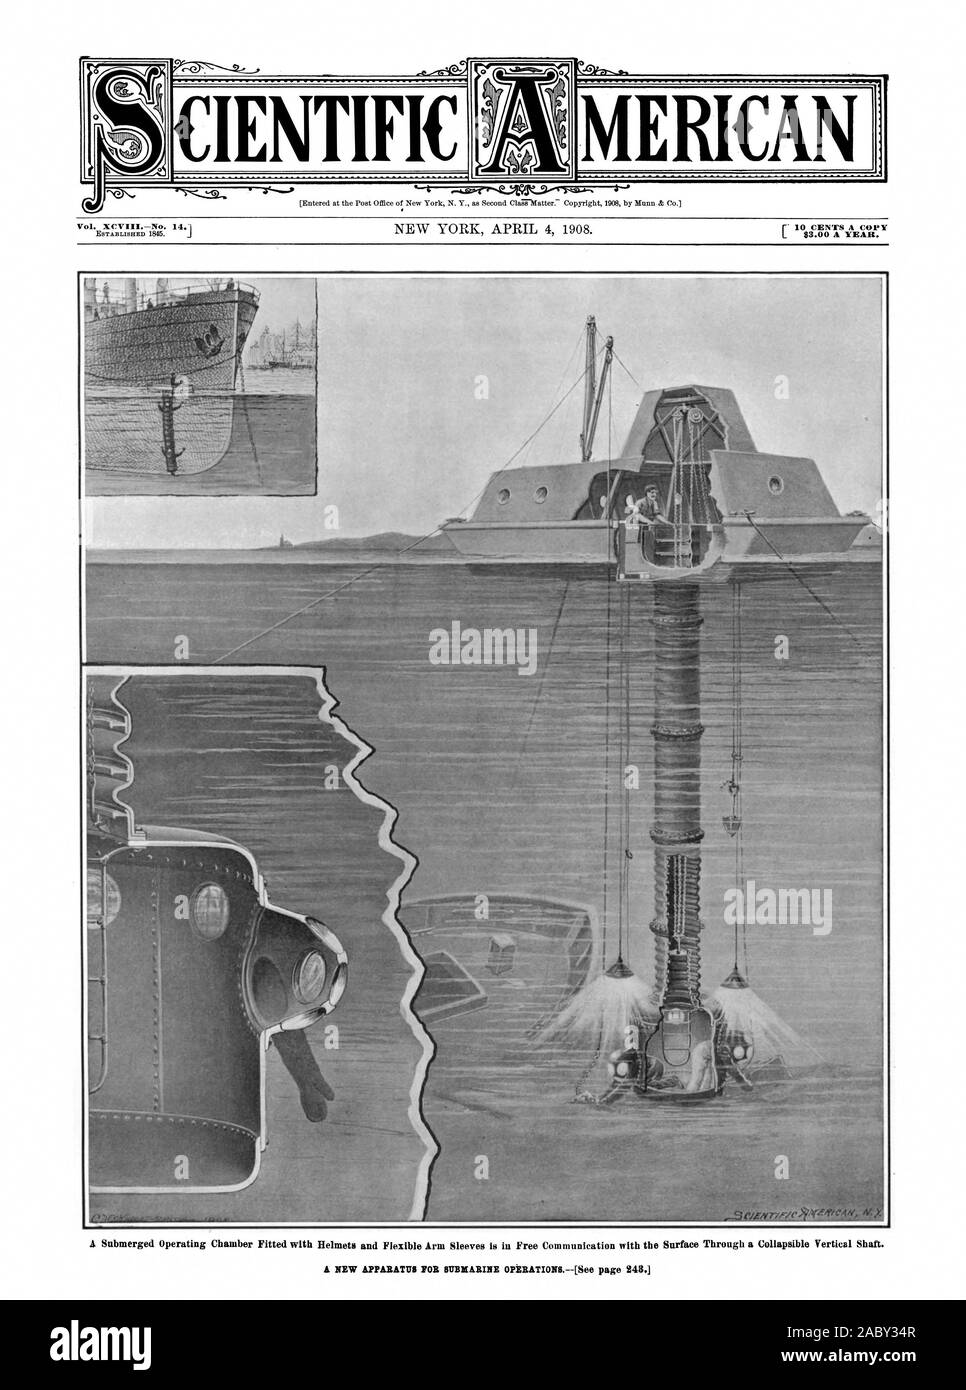 $3.00 A YEAR. Vol. XCVIIINo. 14.i CIENTIFIC MERICAN, scientific american, 1908-04-04, a new apparatus for submarine operations Stock Photo